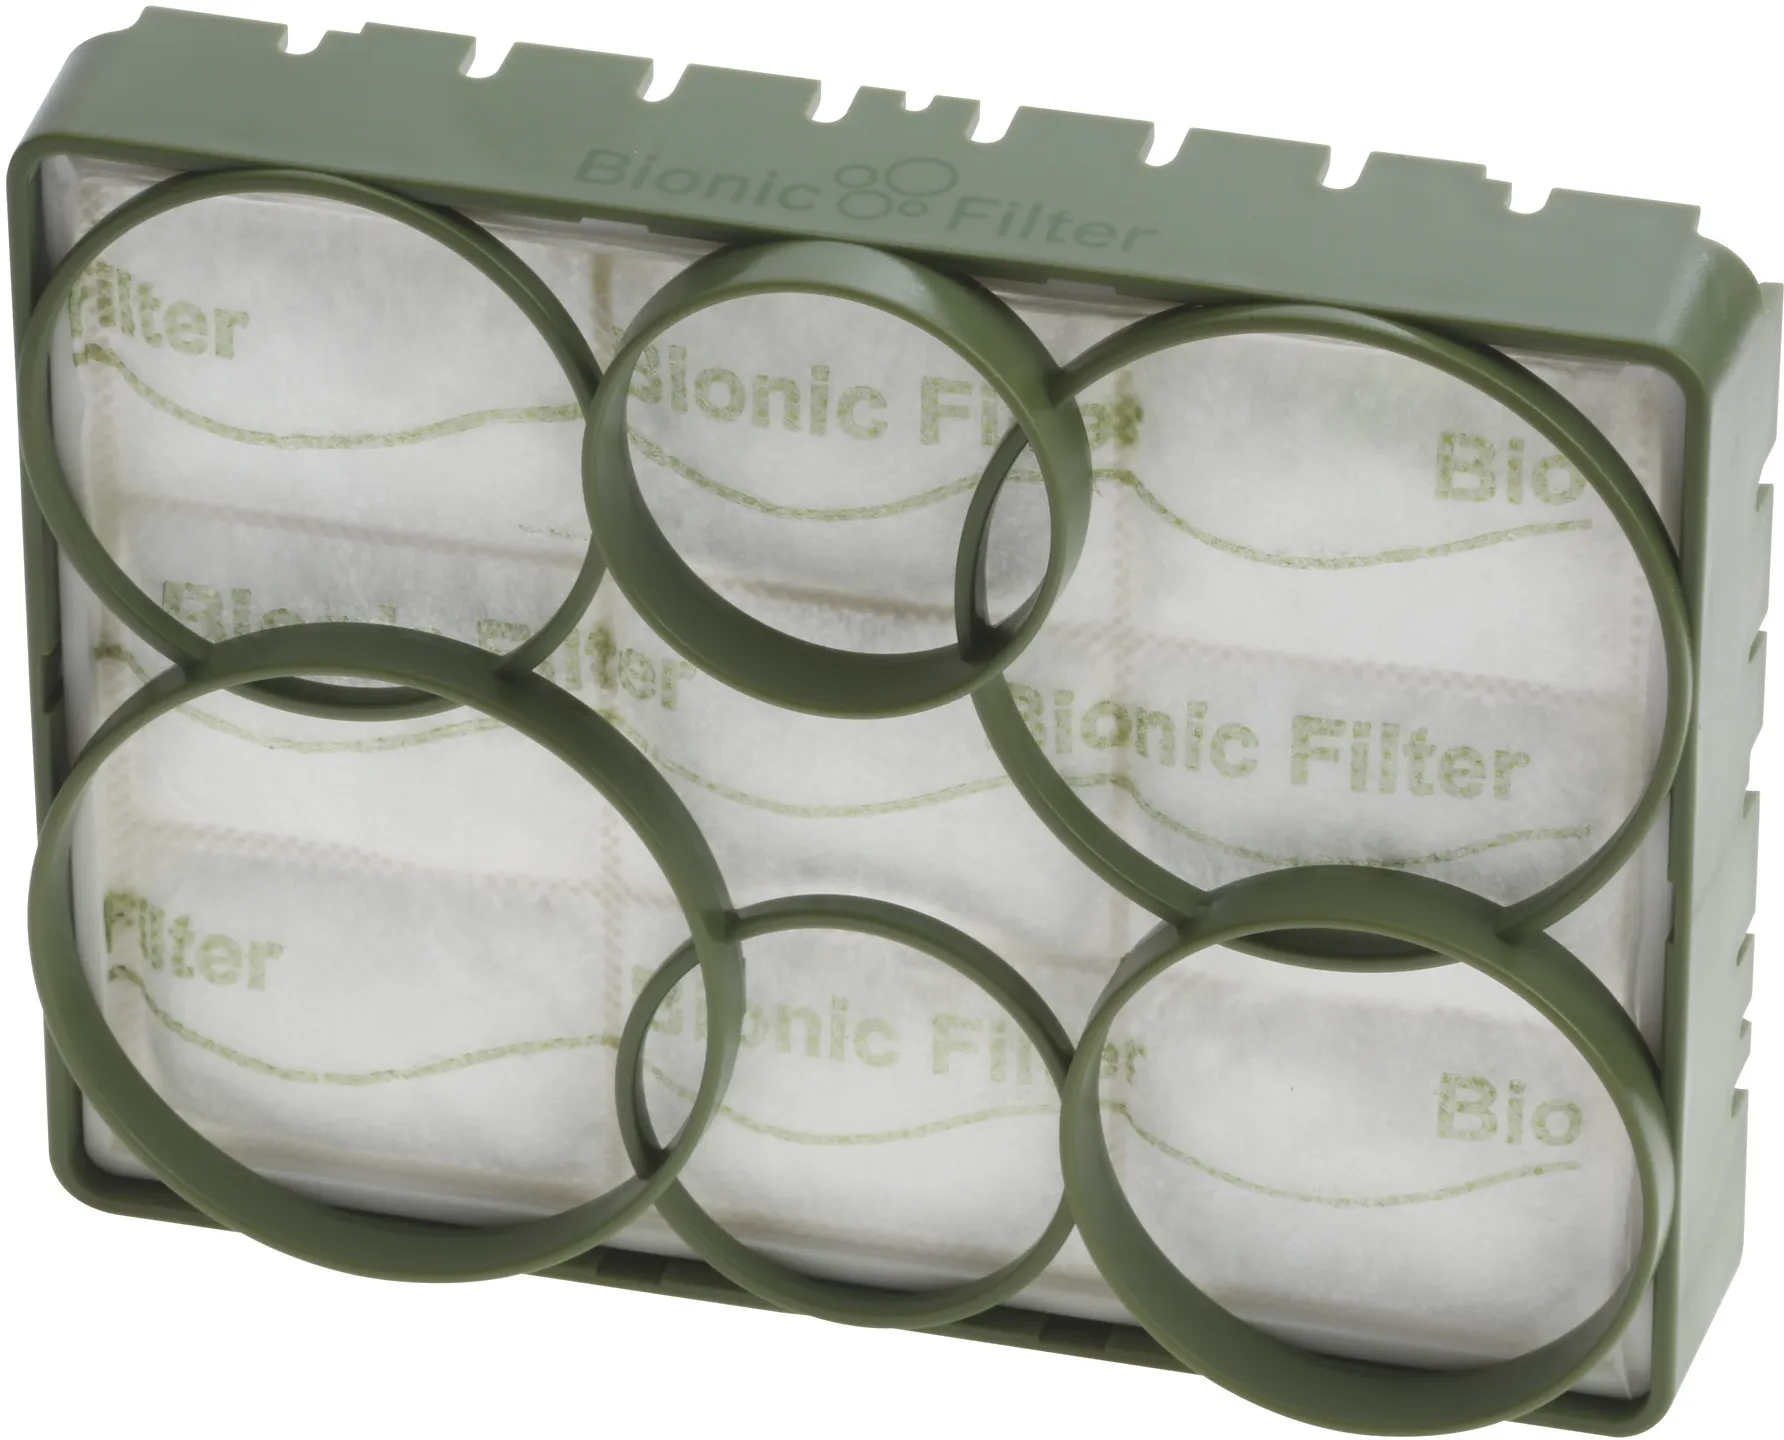 Bionic filter 